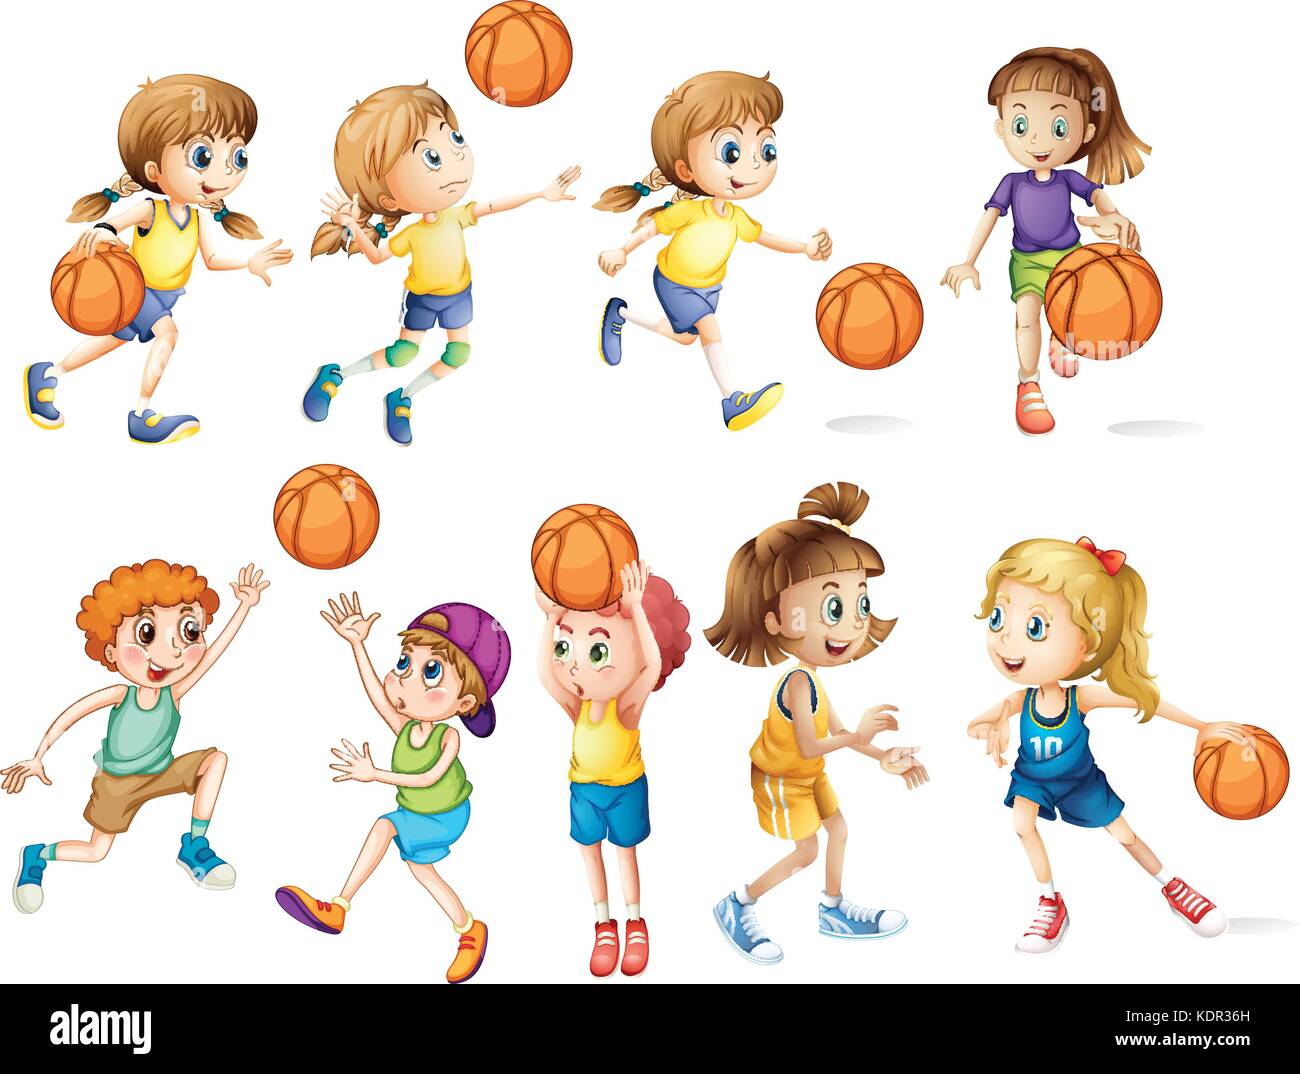 Girls and boys playing basketball illustration Stock Vector